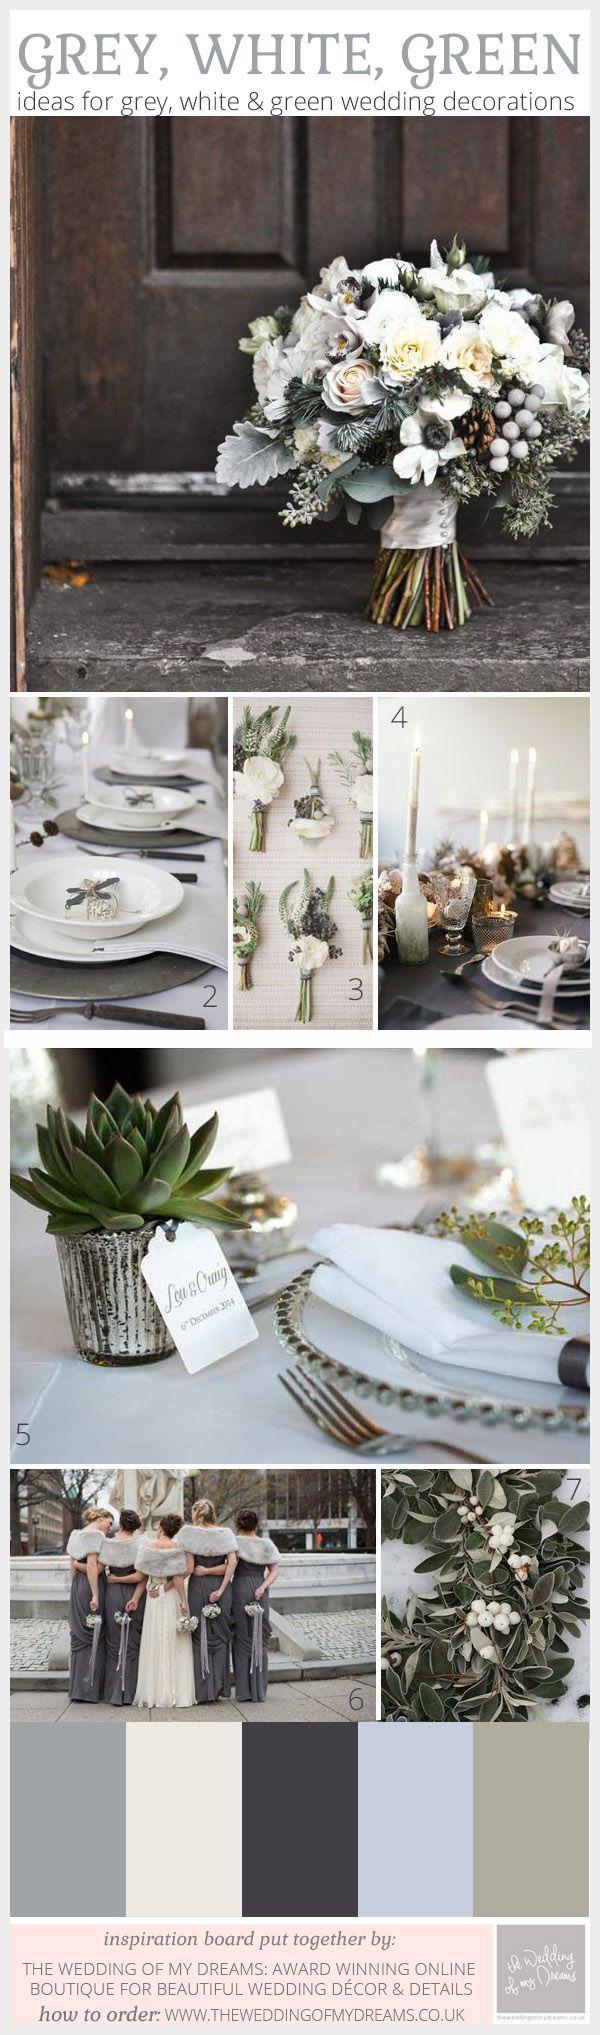 Wedding - Grey White Green Wedding Inspiration Board